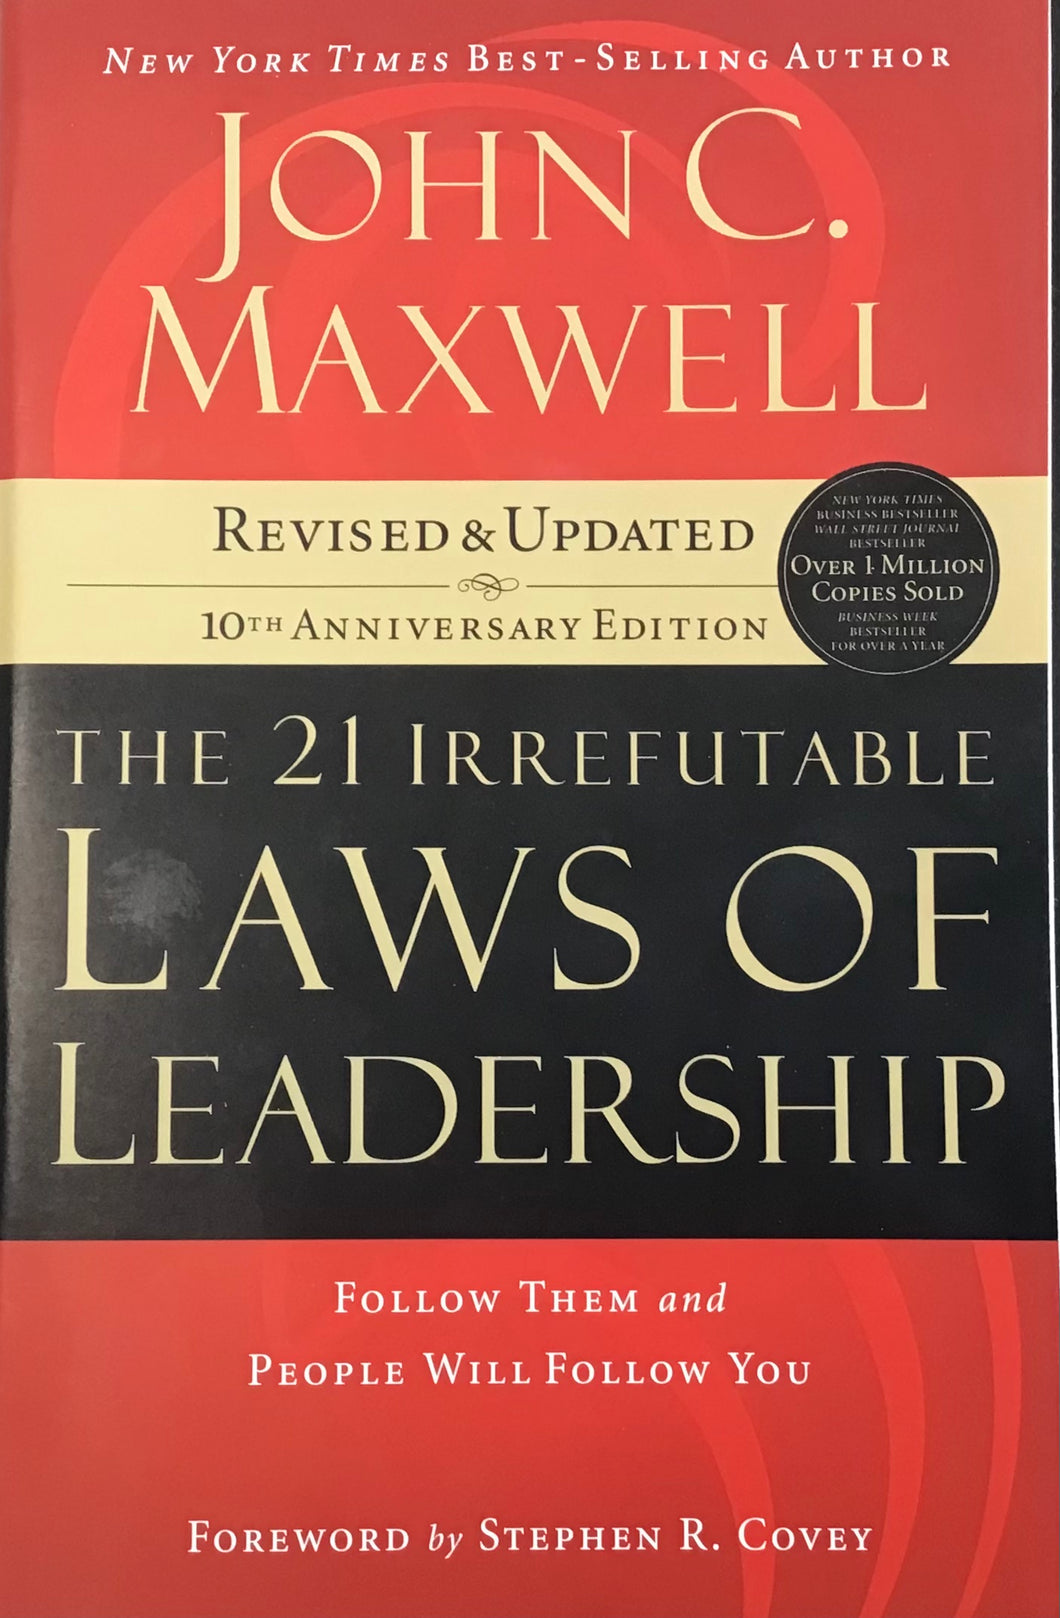 The 21 Irrefutable Laws of Leadership, John C. Maxwell